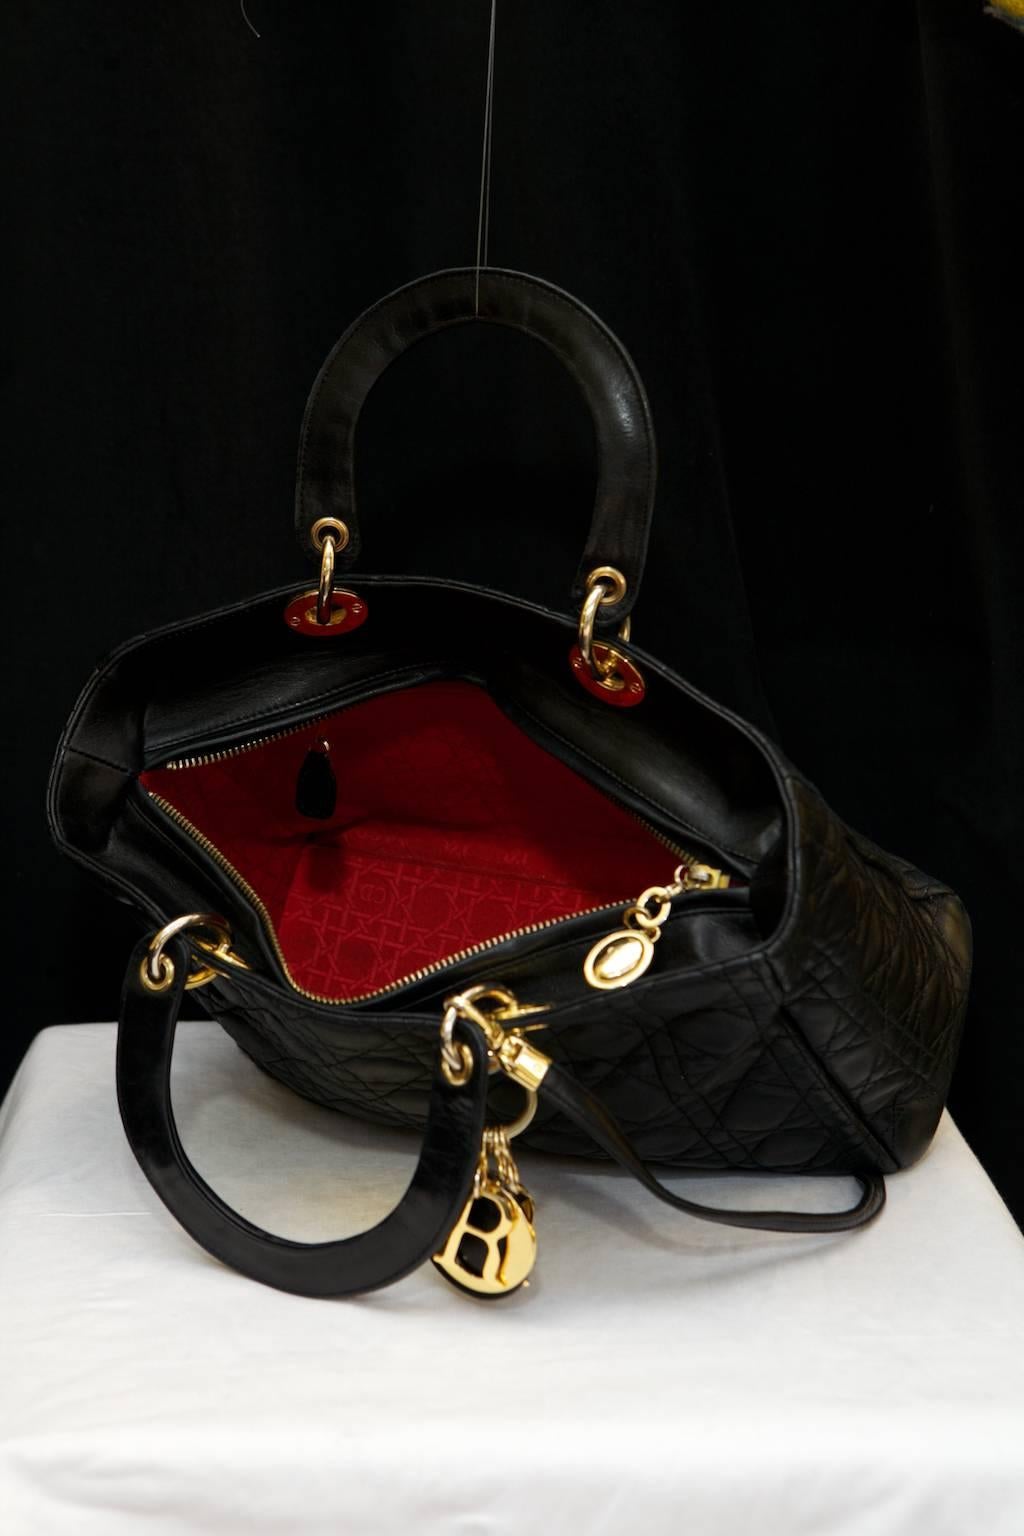 2012 Christian Dior Iconic Large 'Lady Dior' Handbag in Black Lambskin and Gilt 4